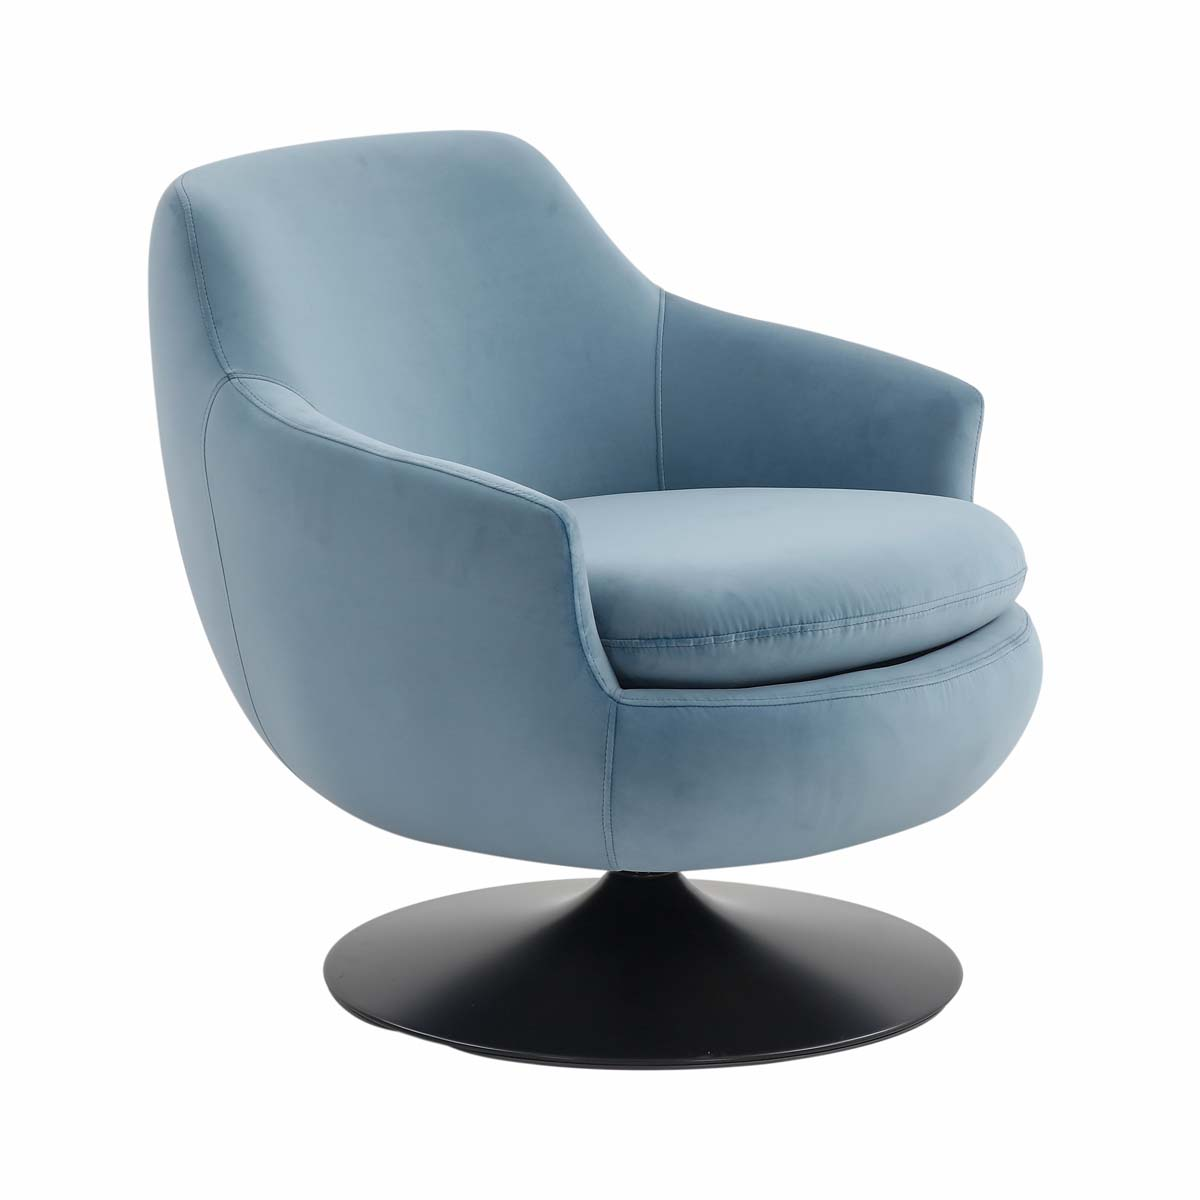 Safavieh Couture Citine Velvet Swivel Accent Chair - Light Blue / Black